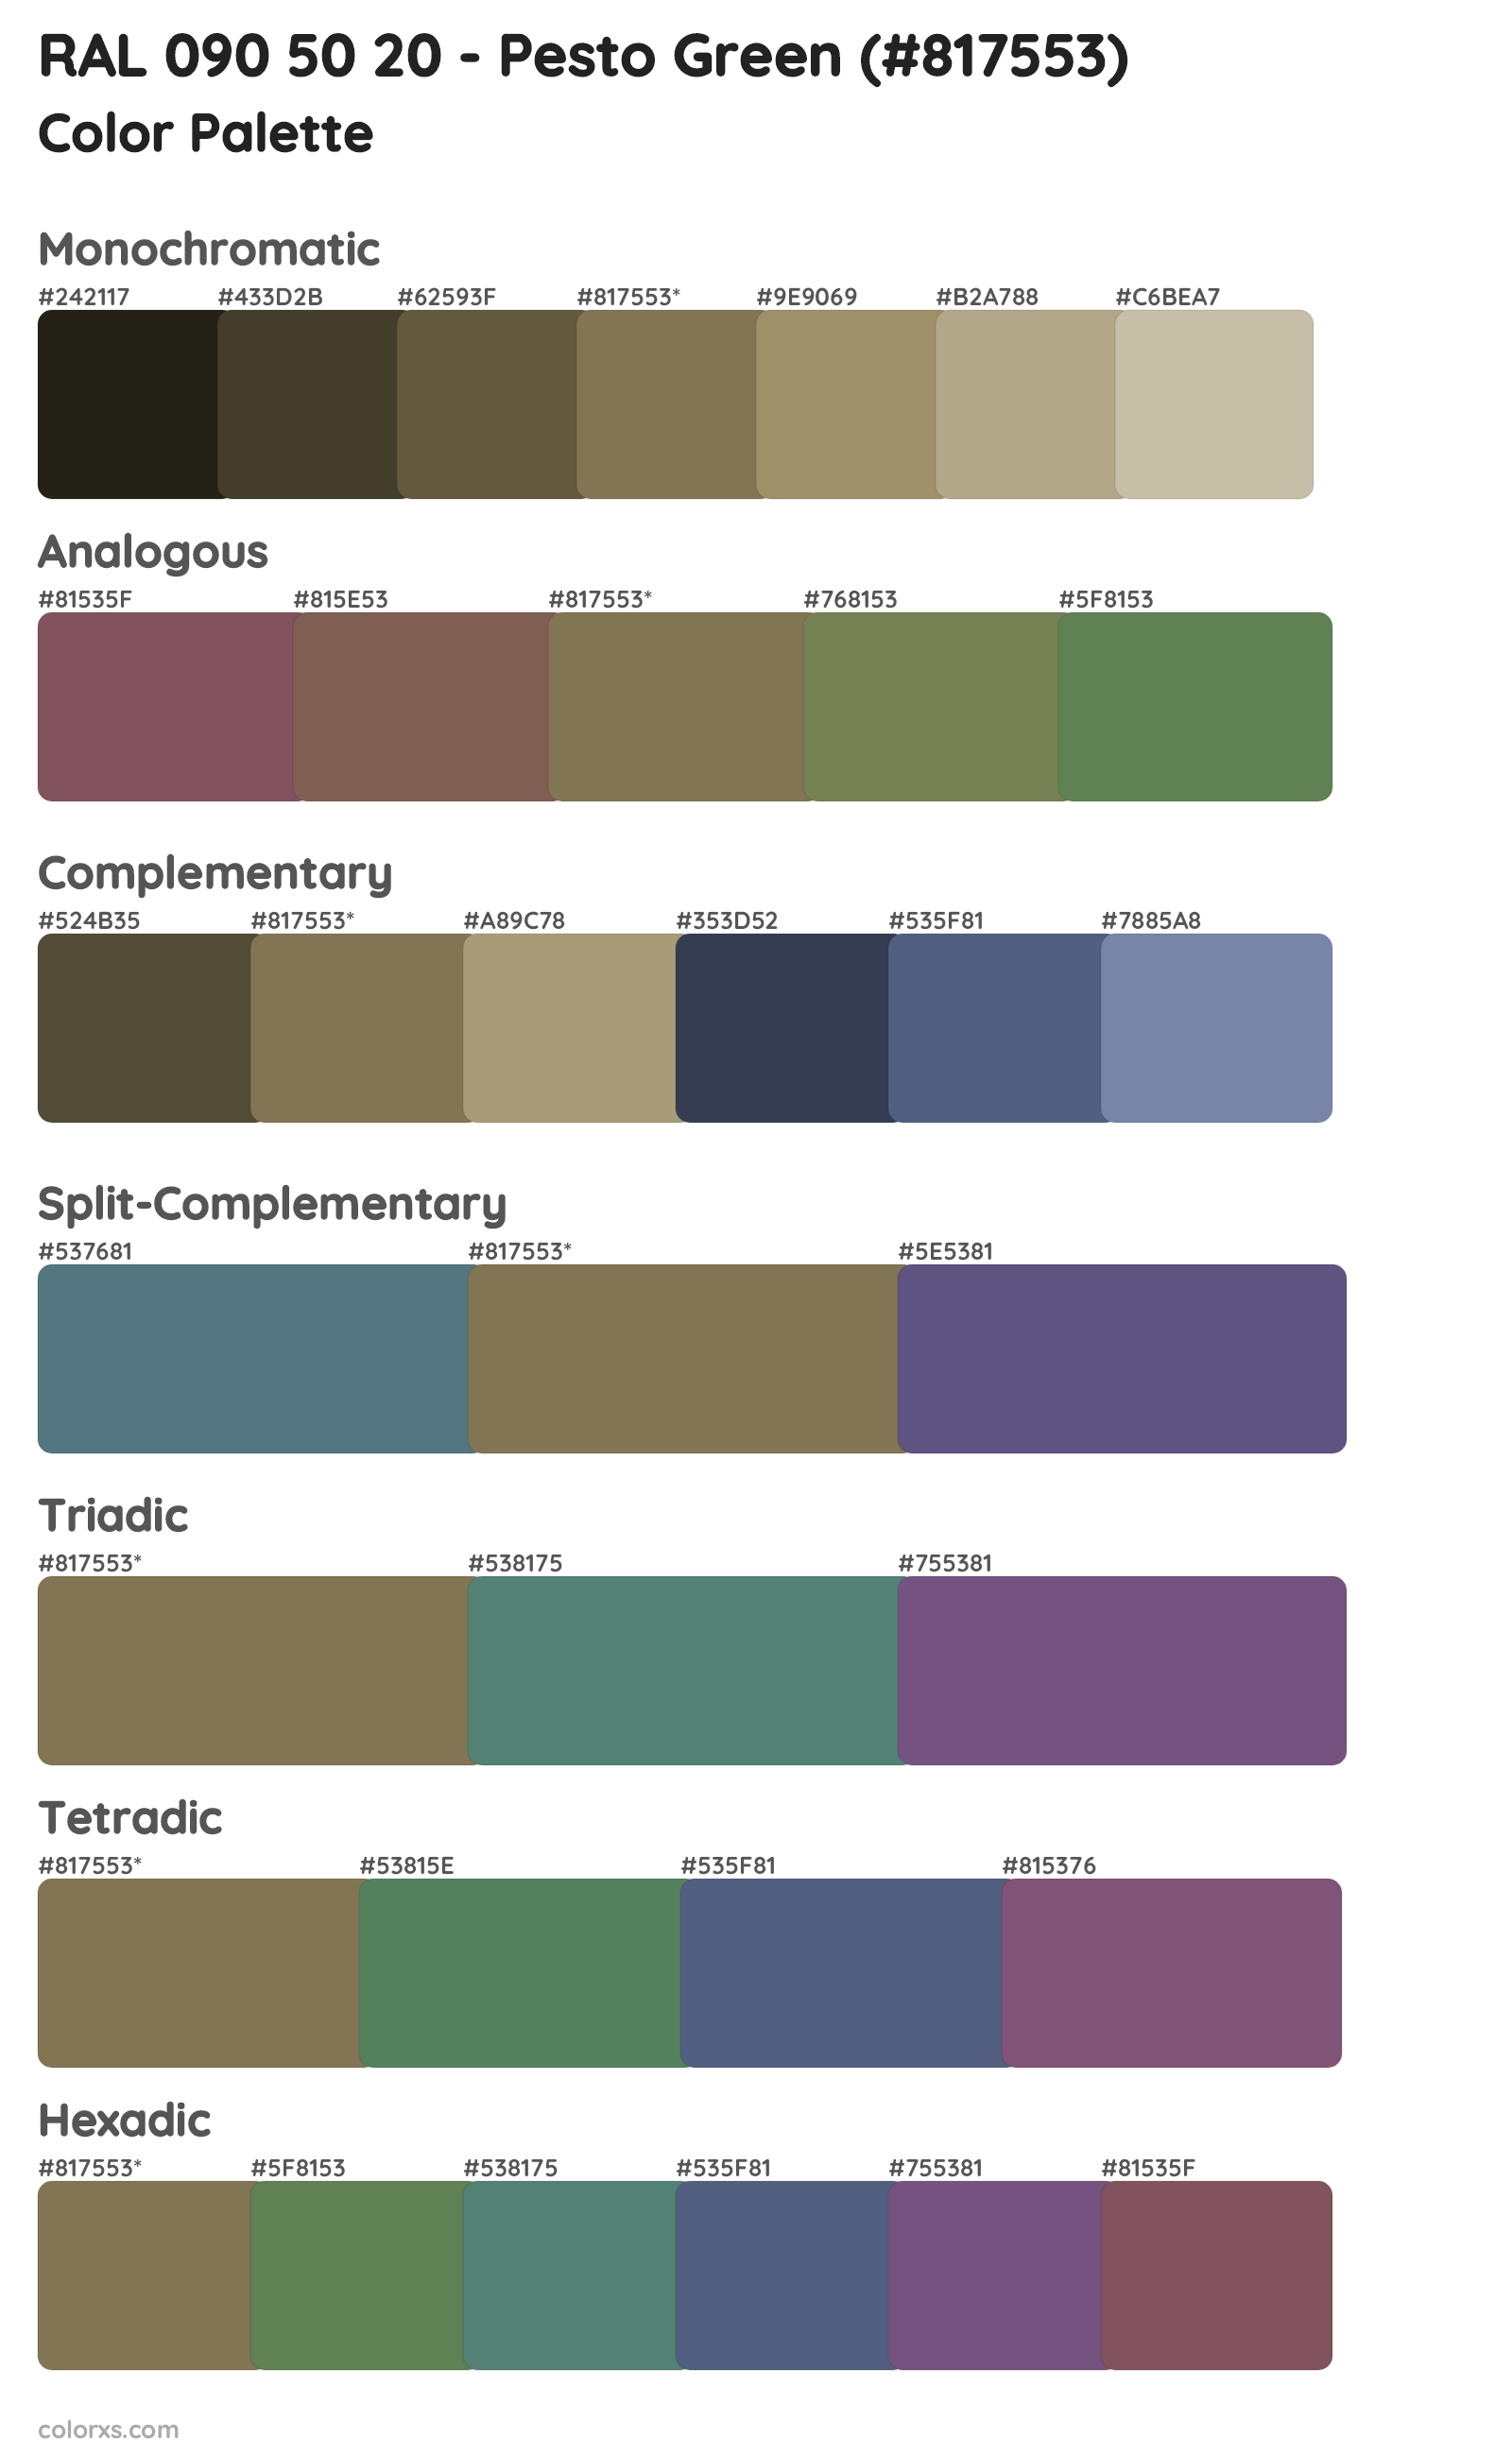 RAL 090 50 20 - Pesto Green Color Scheme Palettes